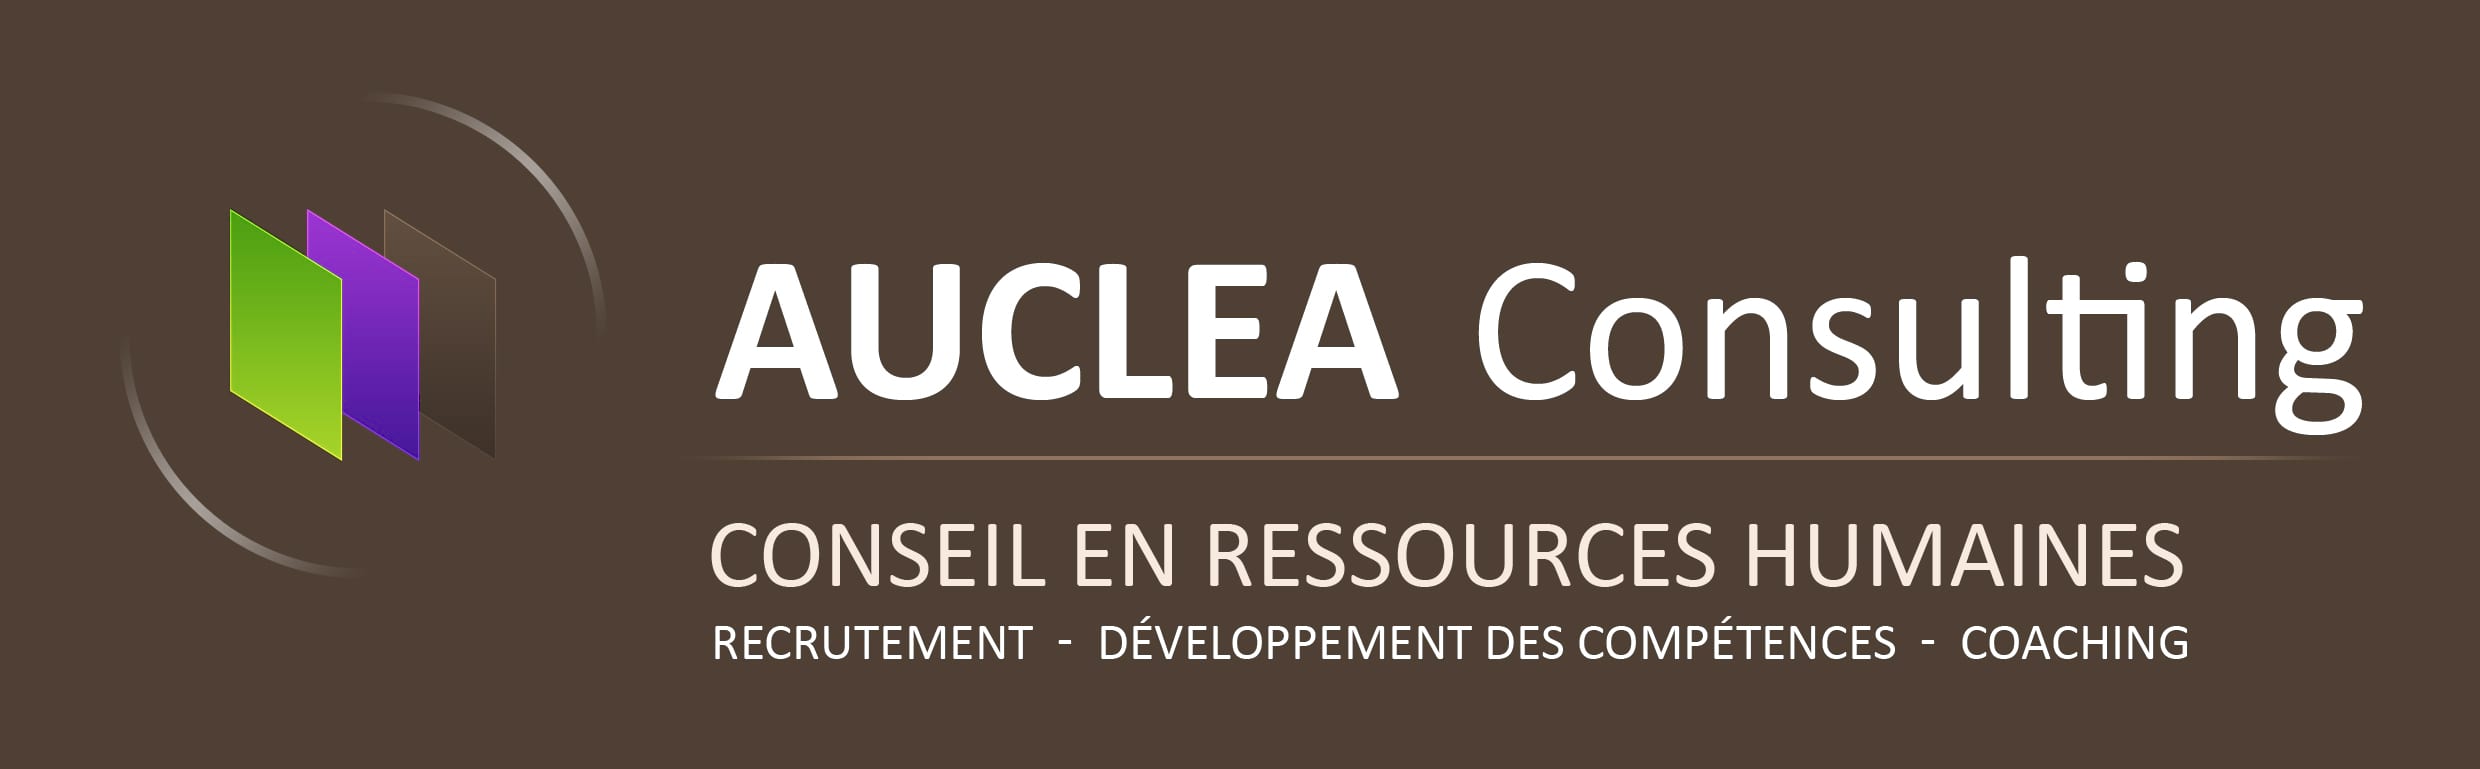 Auclea-consulting-23502